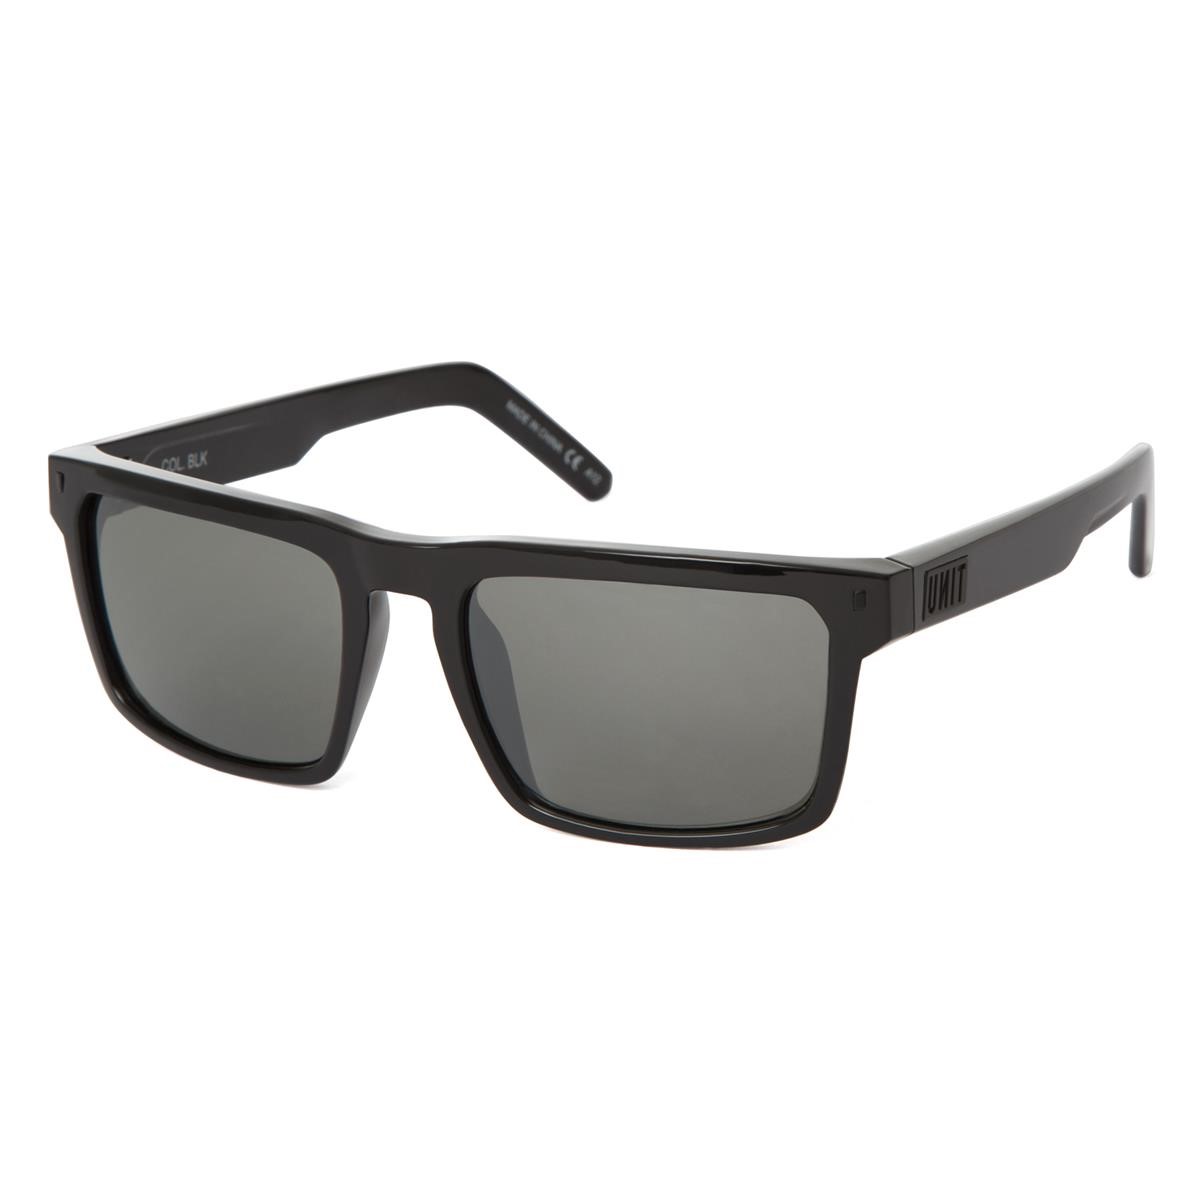 Unit Sunglasses Primer Black/Grey